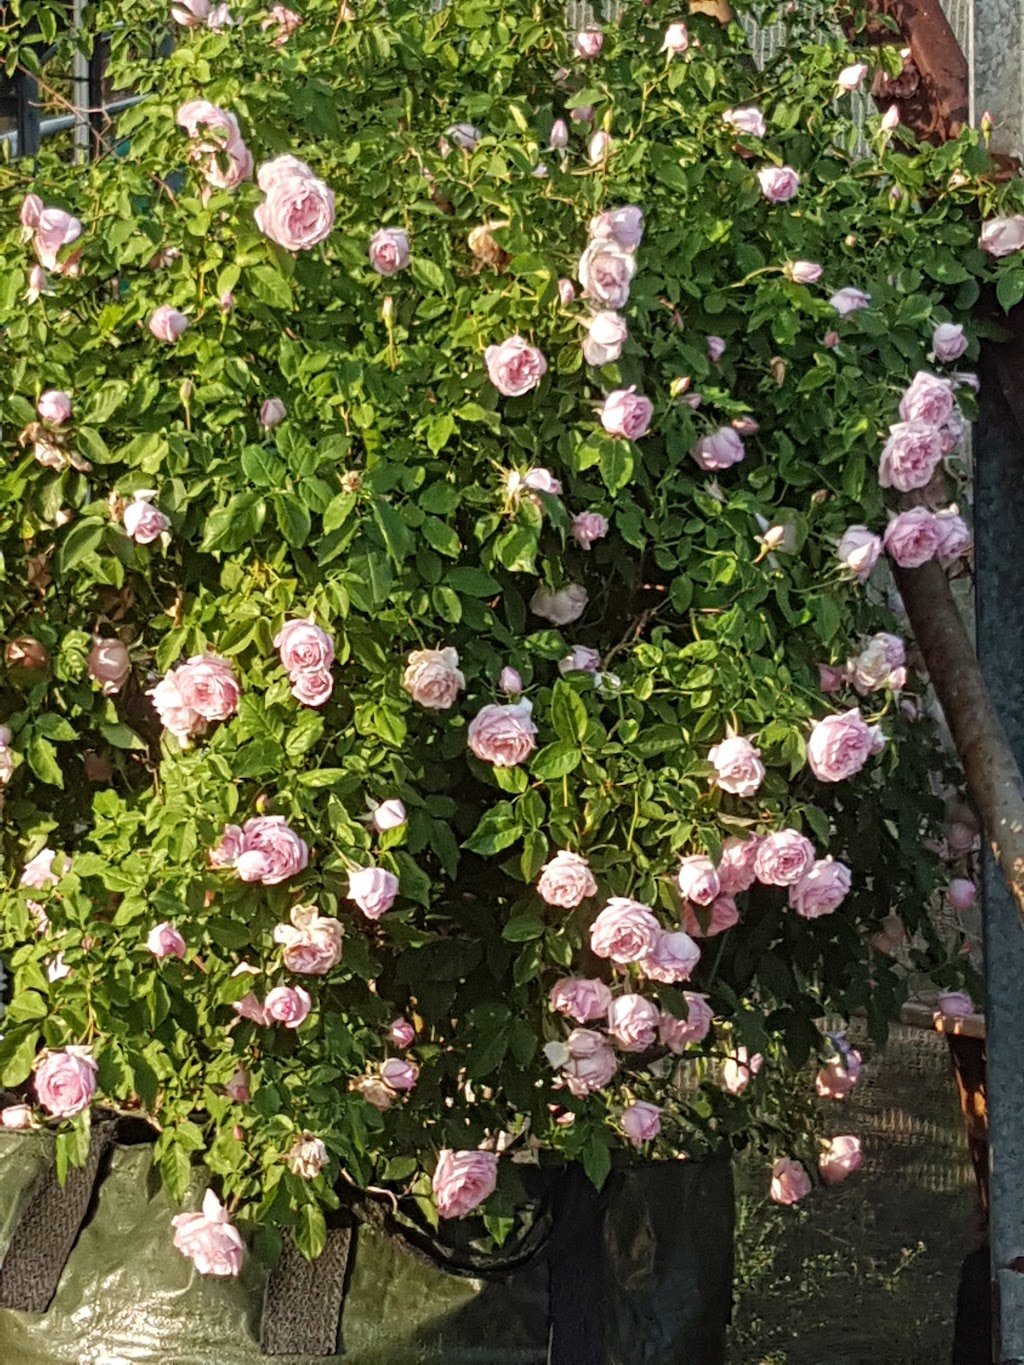 Rosemount Flowers |  | 506 Petrie Creek Rd, Rosemount QLD 4560, Australia | 0408315311 OR +61 408 315 311